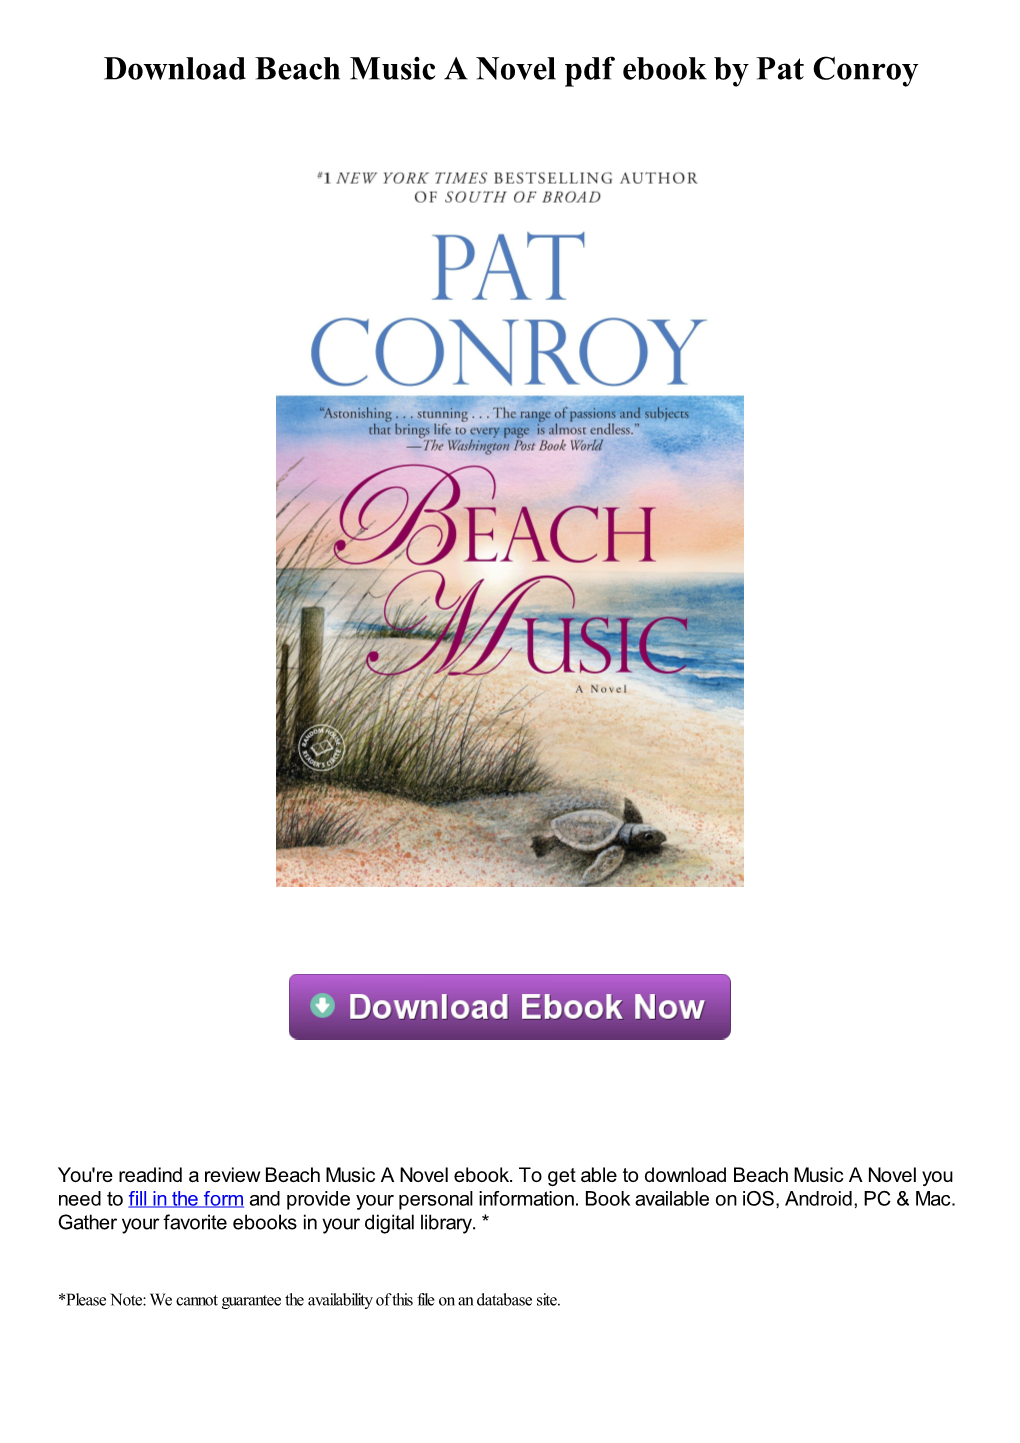 Download Beach Music a Novel Pdf Book by Pat Conroy